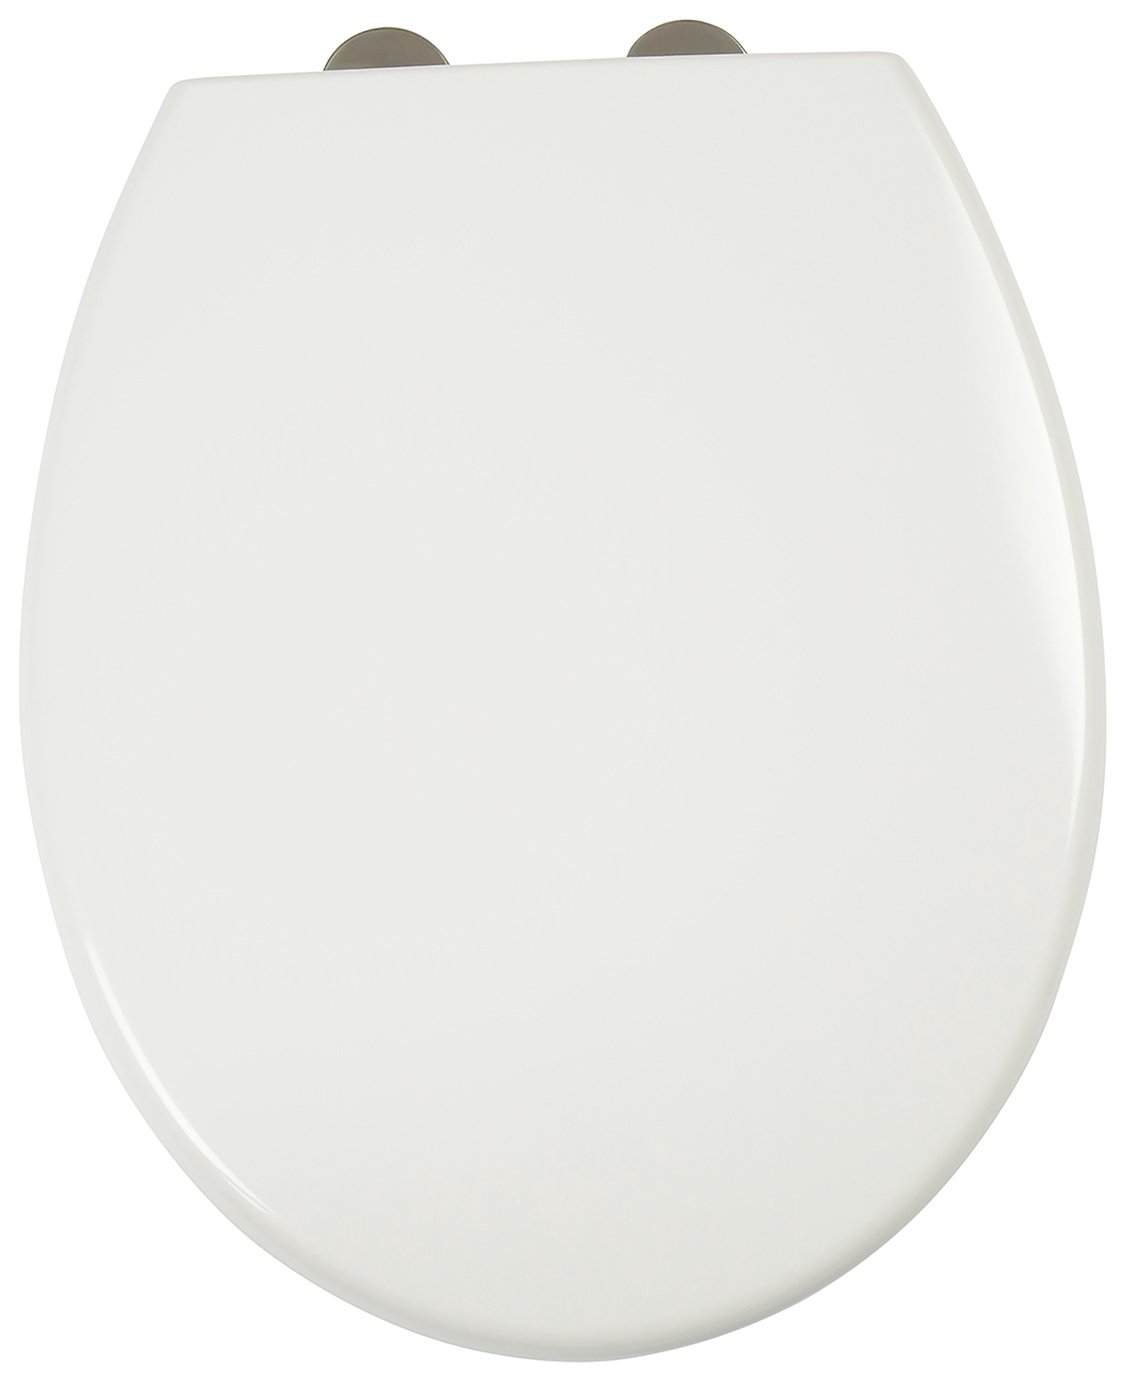 Croydex Luminoso Illuminated Slow Close Toilet Seat - White